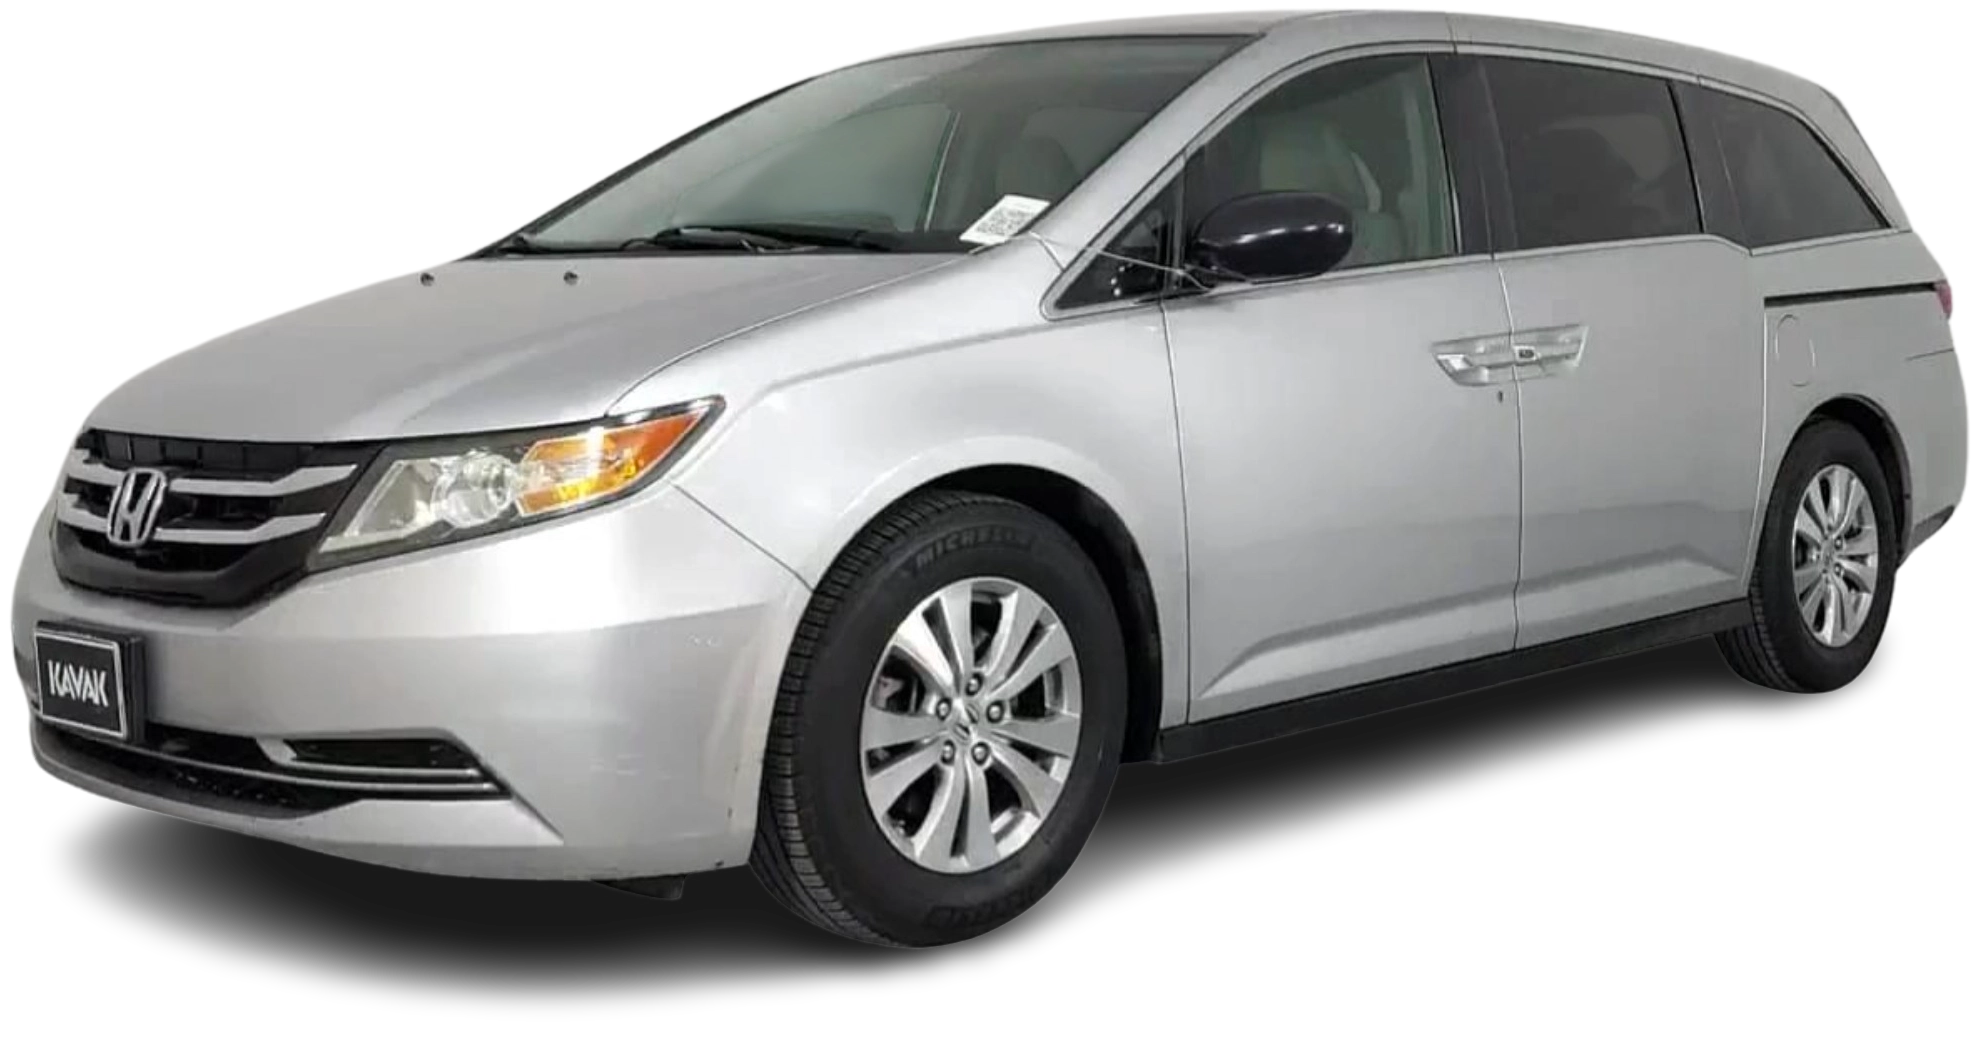 Honda Odyssey Minivan 2017 2016 2015 2014 2013 2012 2011 2010